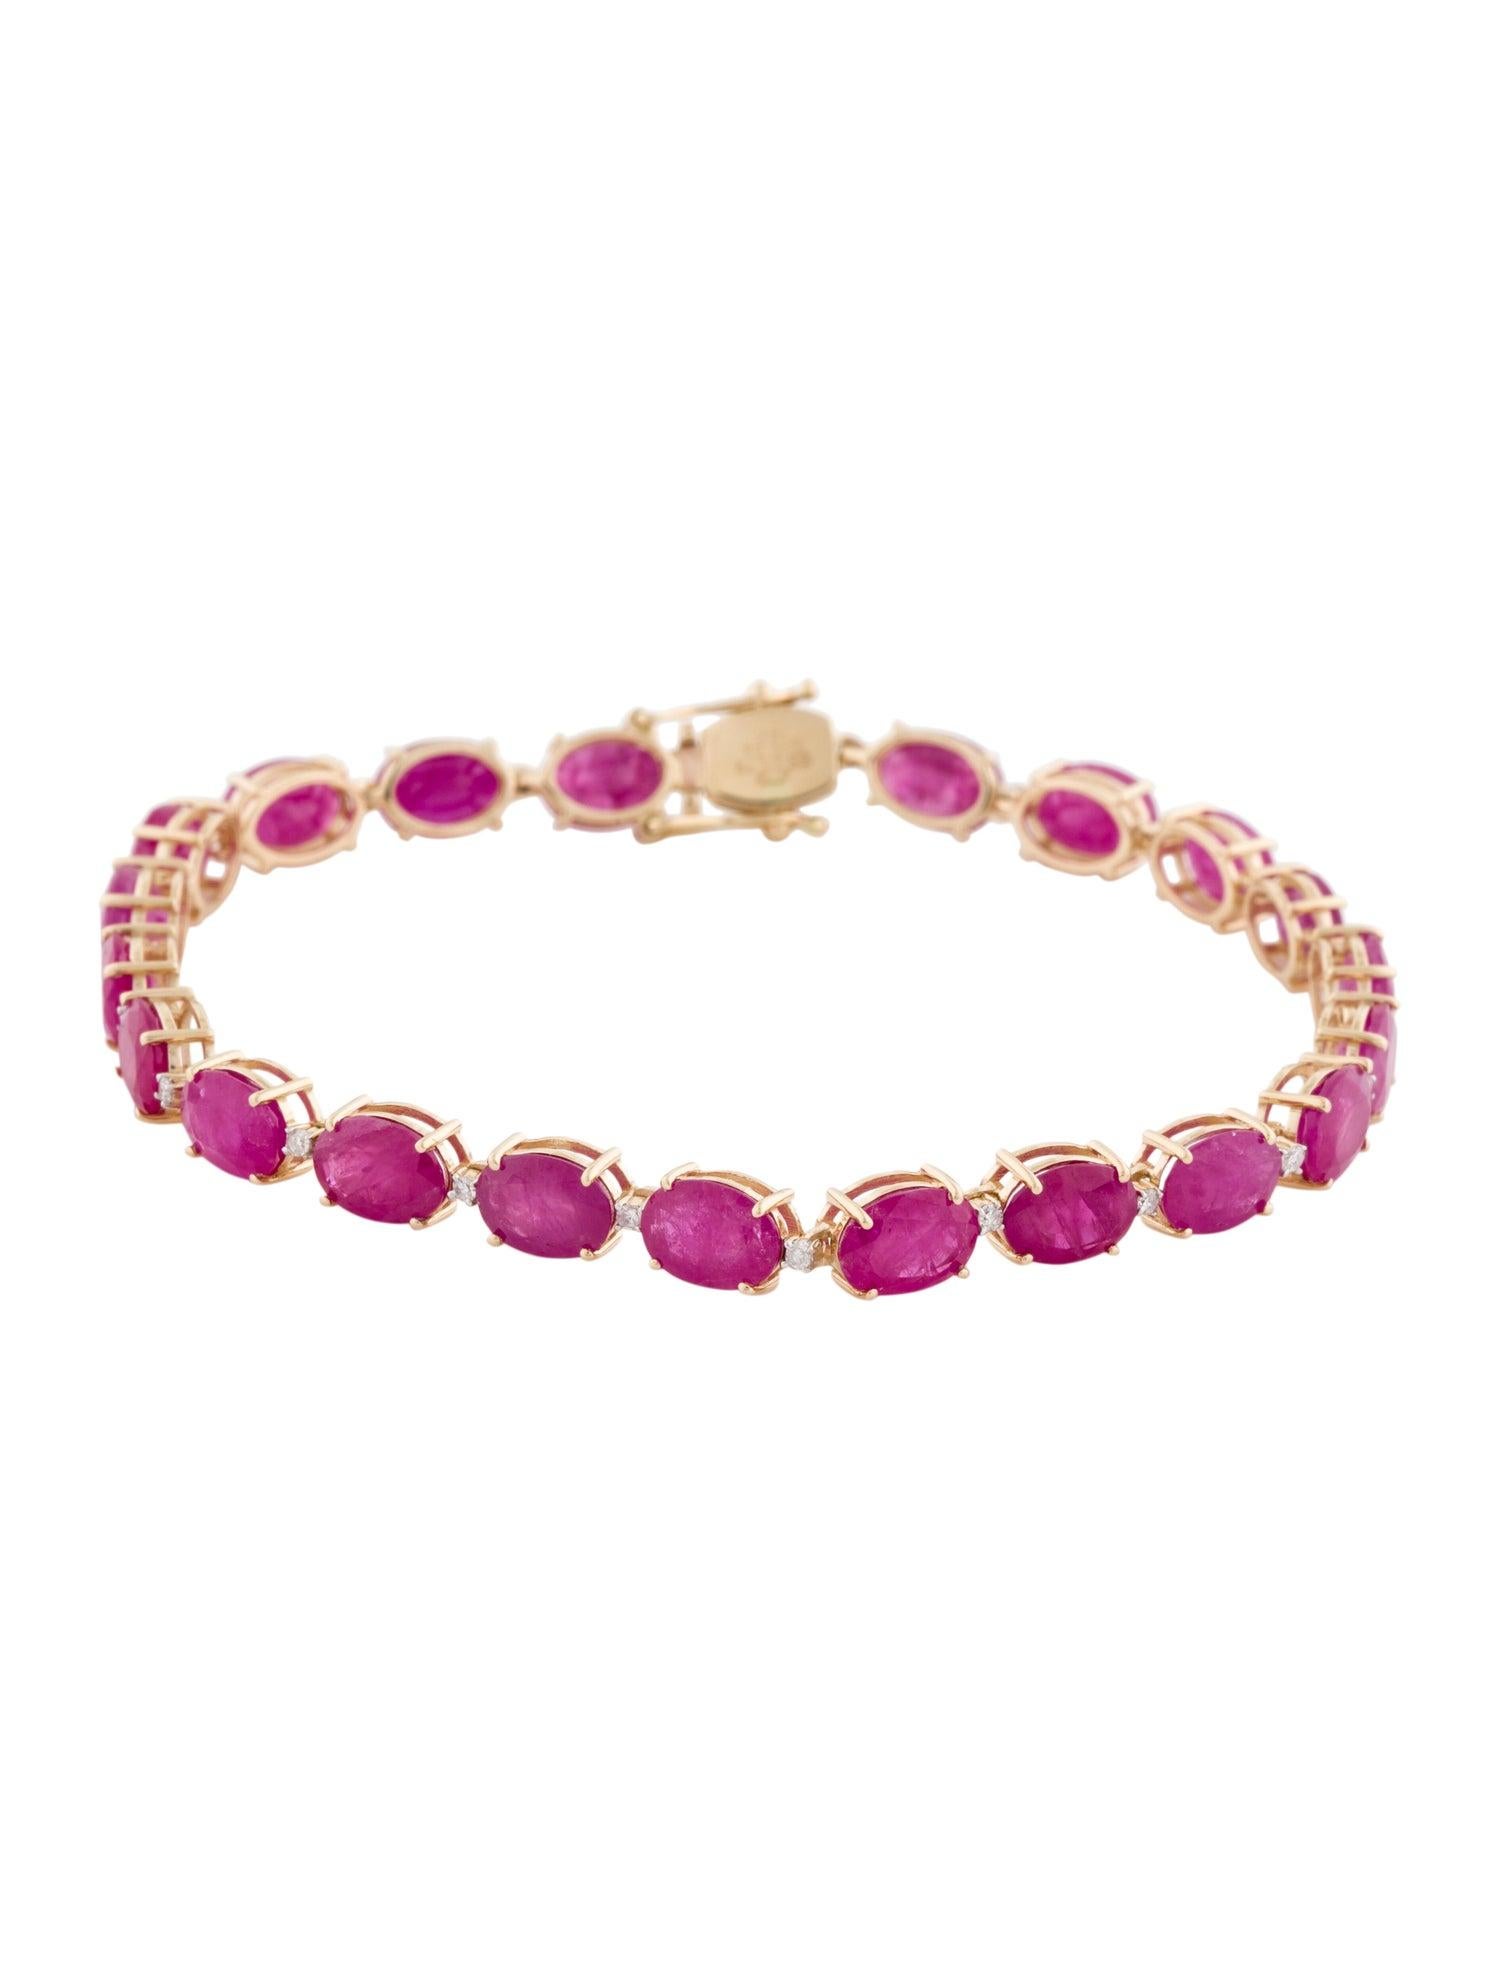 Brilliant Cut 14K Ruby & Diamond Link Bracelet - Exquisite Gemstone Elegance, Timeless Luxury For Sale